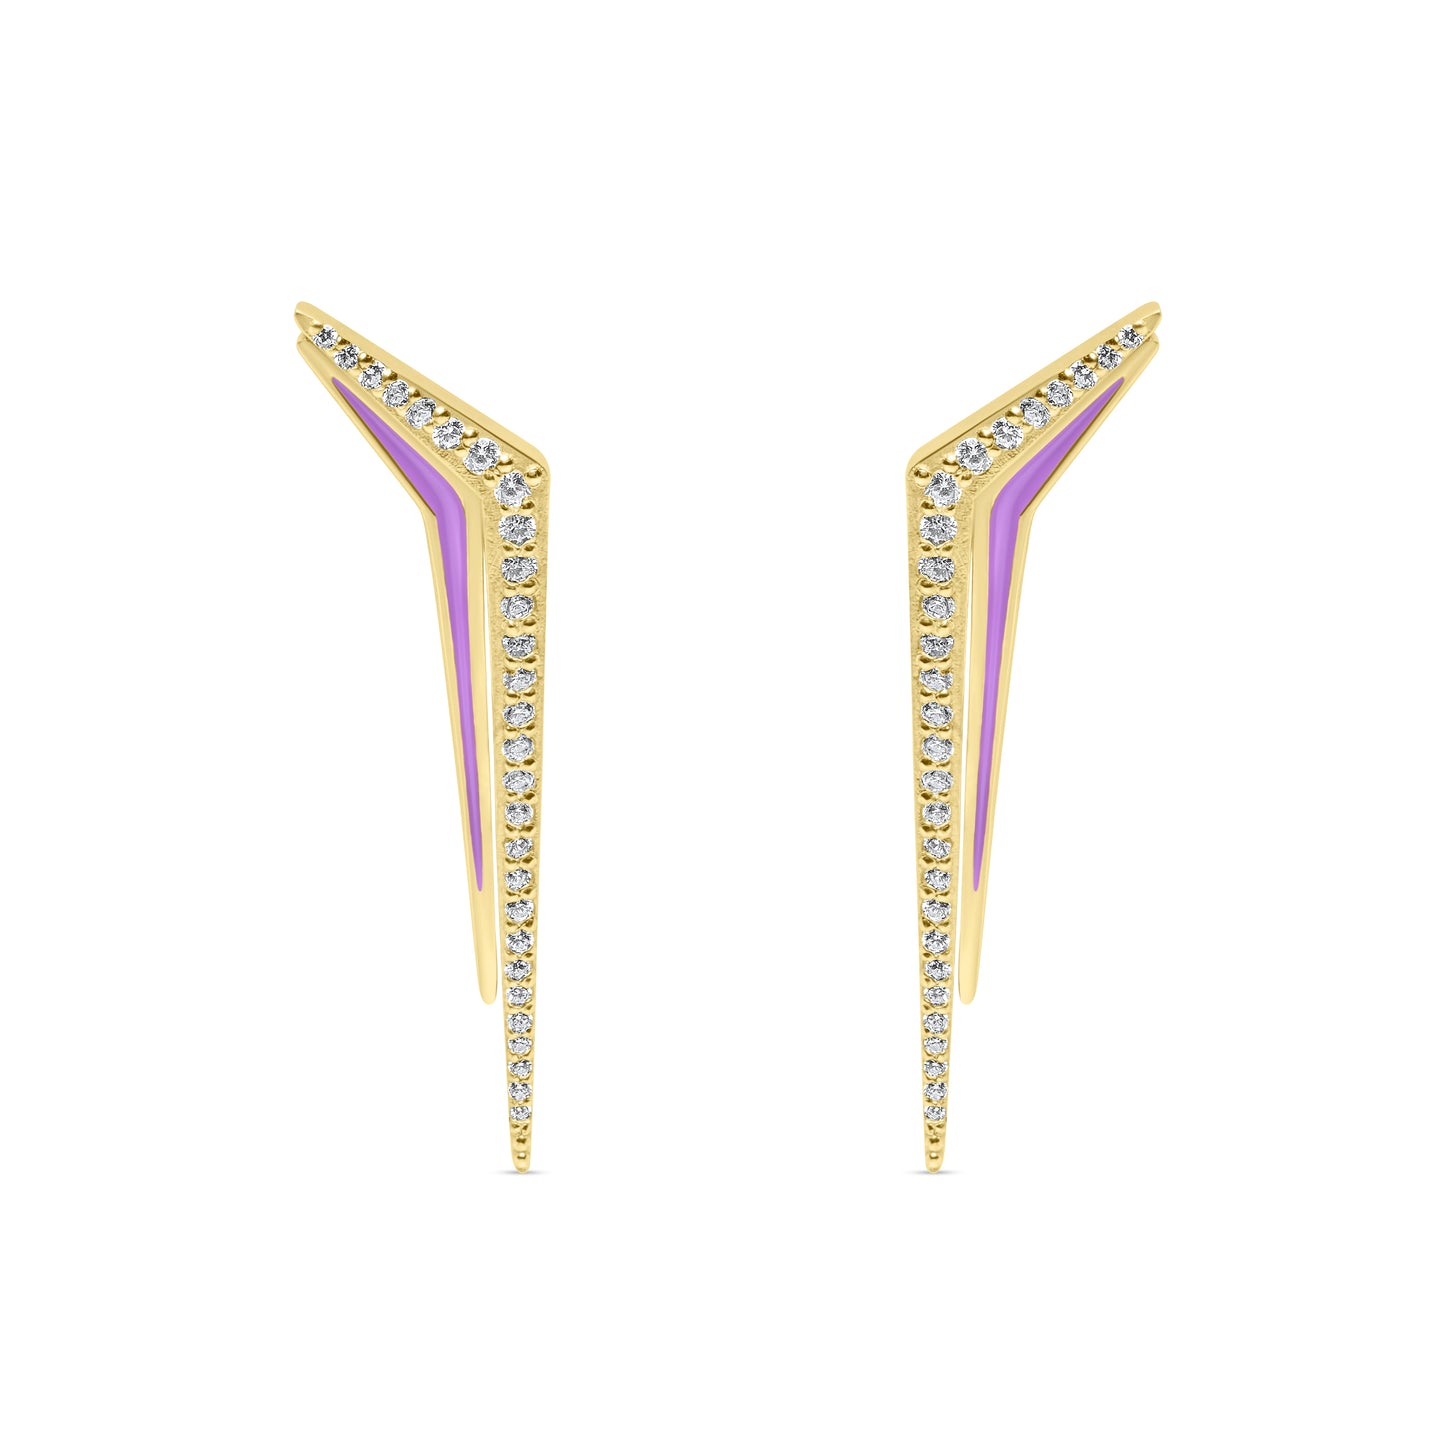 Lilla Boomerang Pair Earrings - Gold Plated